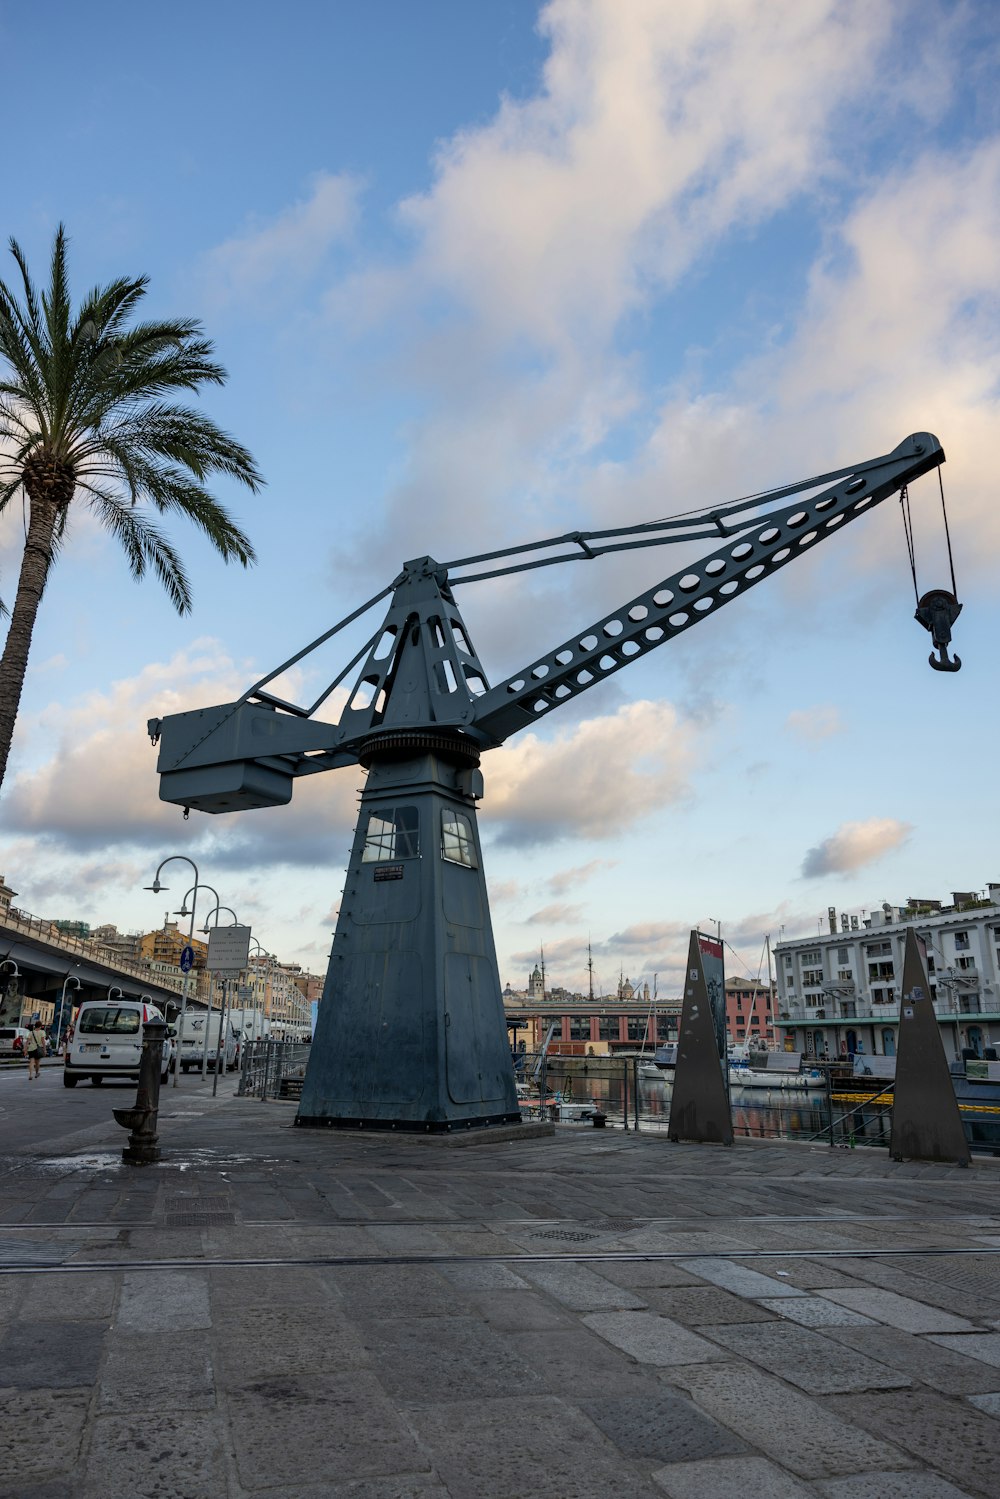 a large sculpture of a crane